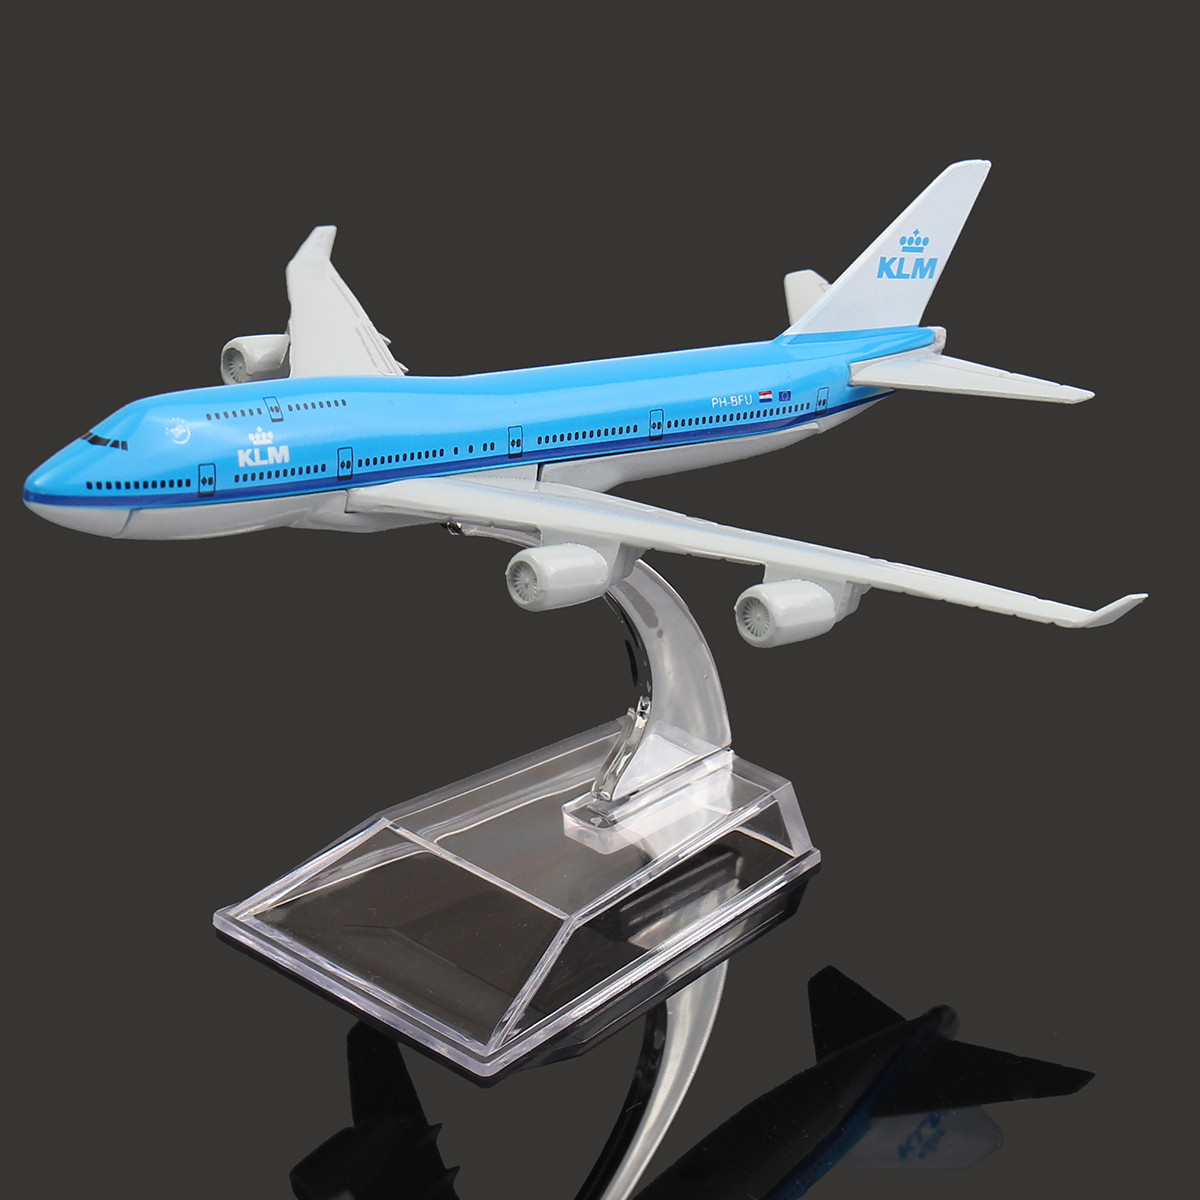 NEW-16cm-Airplane-Metal-Plane-Model-Aircraft-B747-KLM-Aeroplane-Scale-Airplane-Desk-Toy-1102722-3